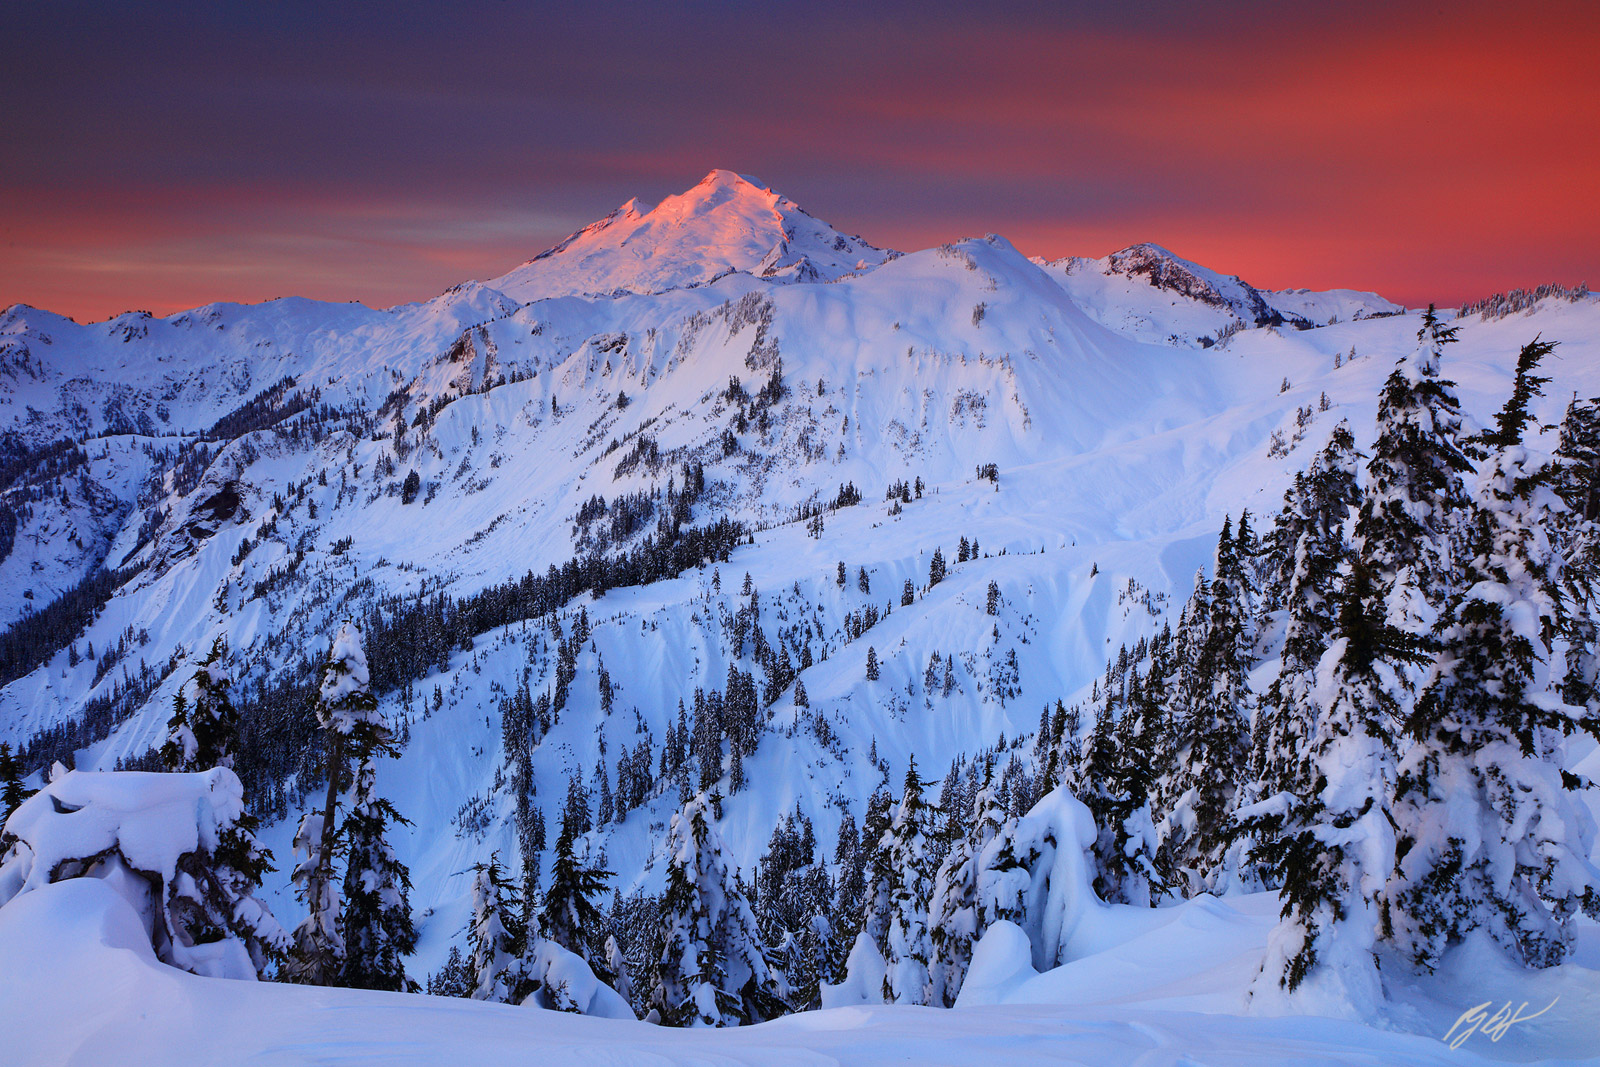 Winter Sunrise on Mt Baker from Artist Ridge in the Mt Baker National Recreation Area in Washington